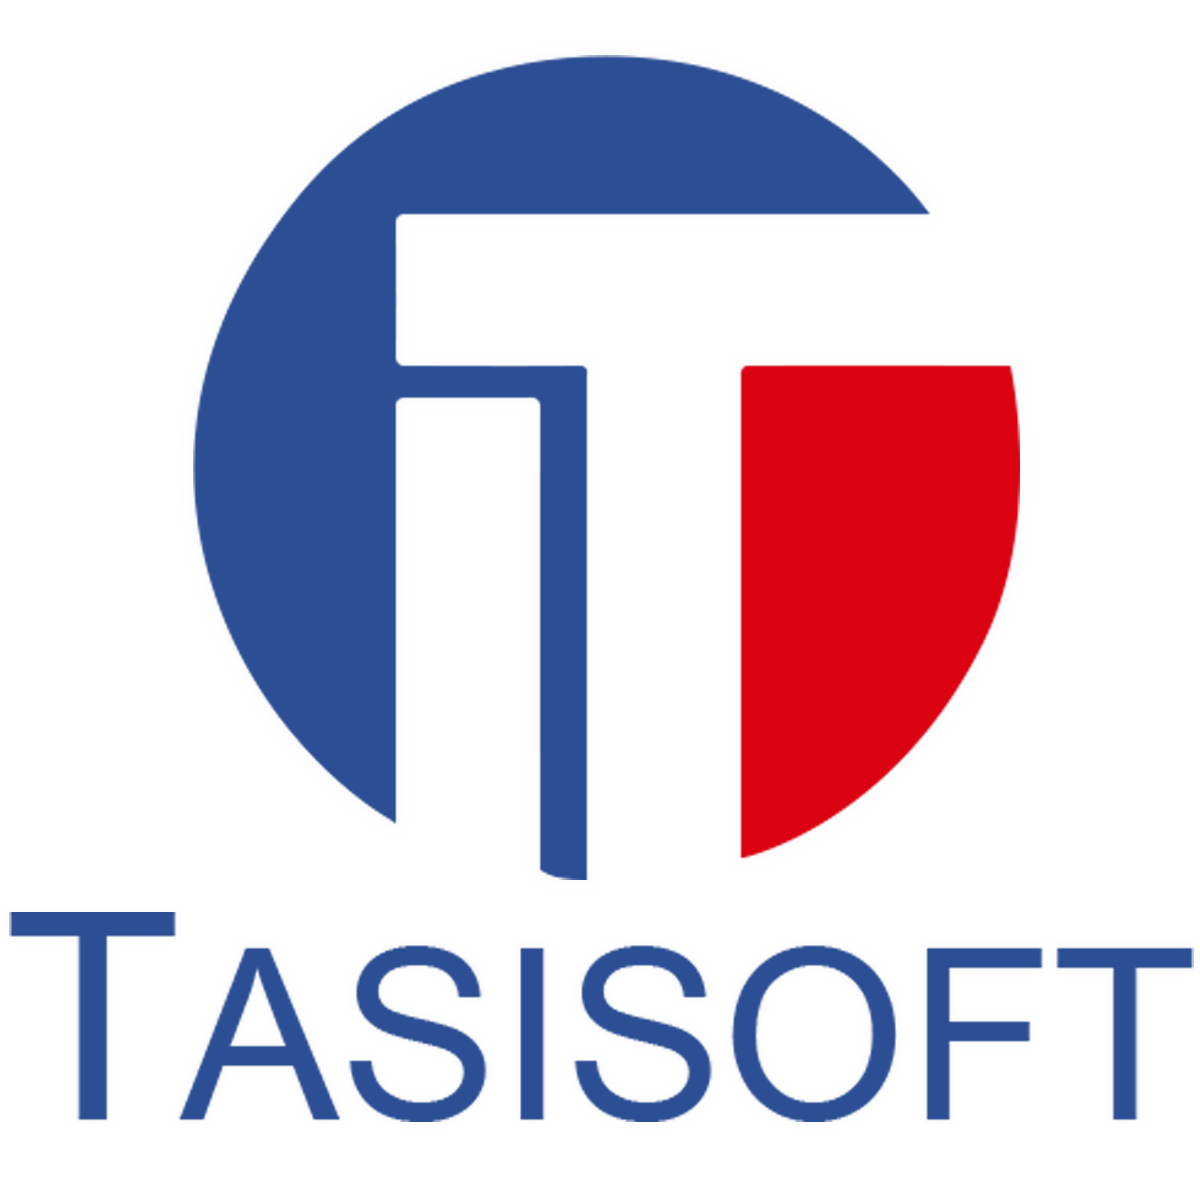 Tasinet2